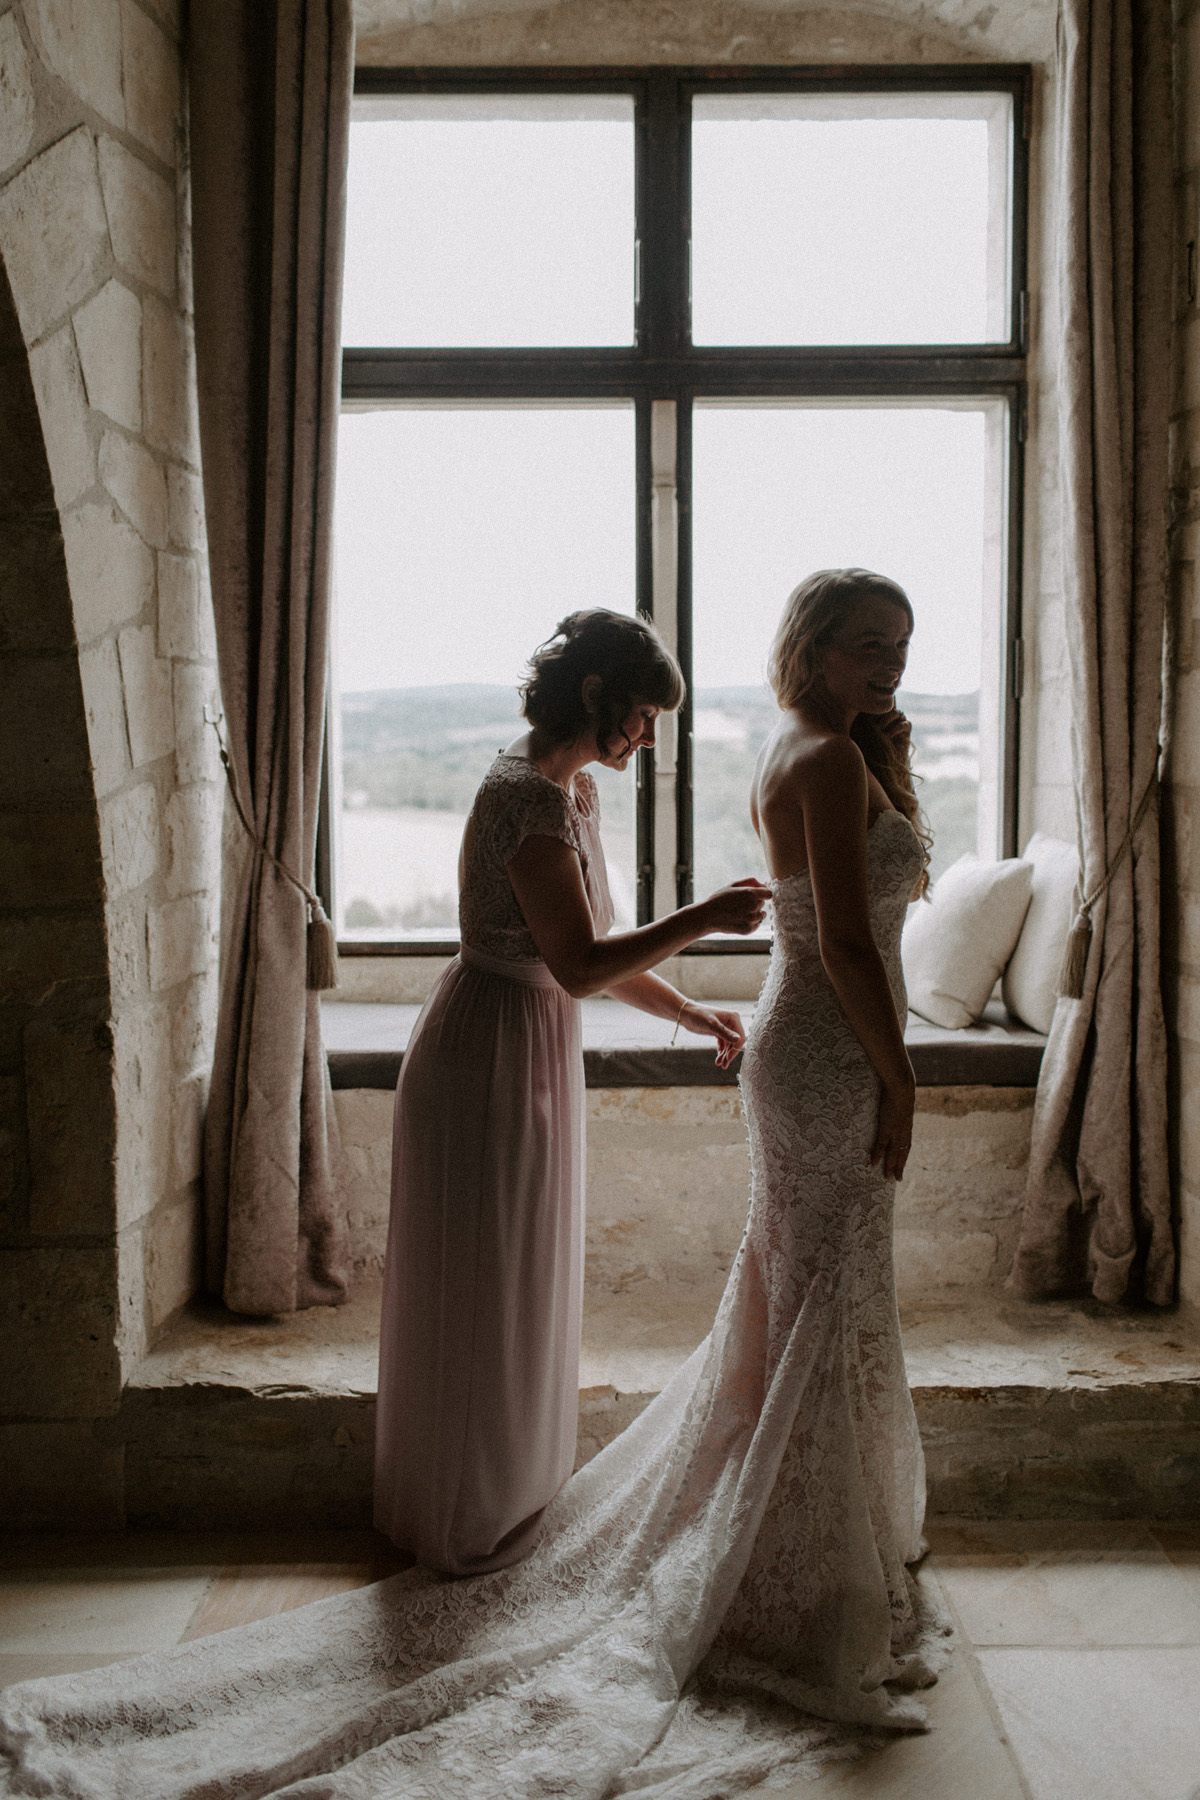 Pronovias lace wedding dress